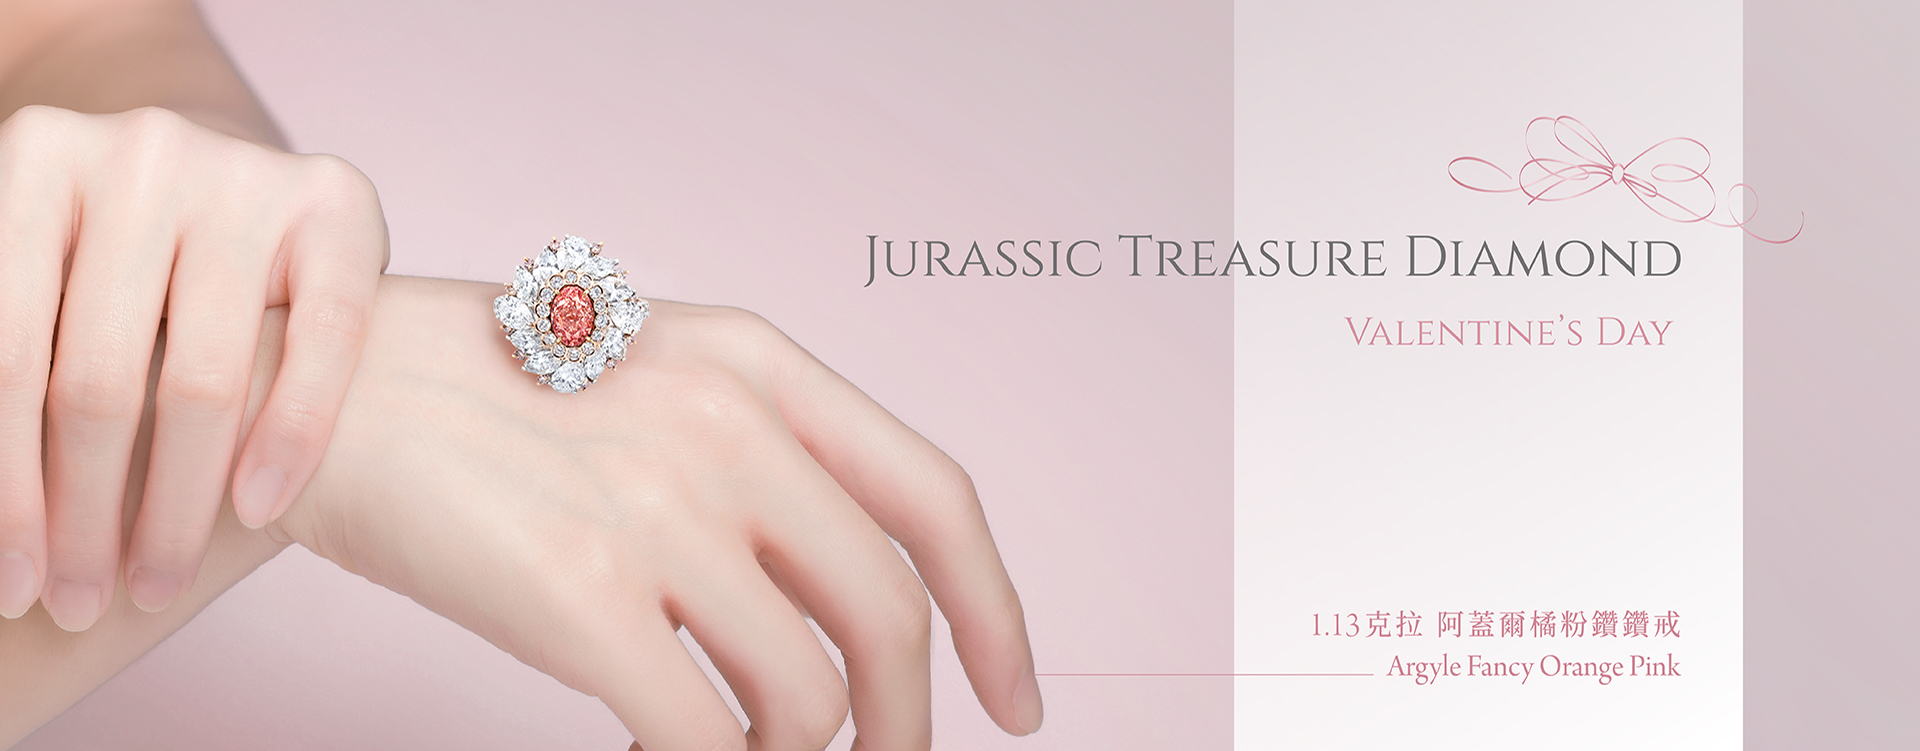 Treasure Diamond Valentine’s Day Pink Diamond 粉鑽情人節